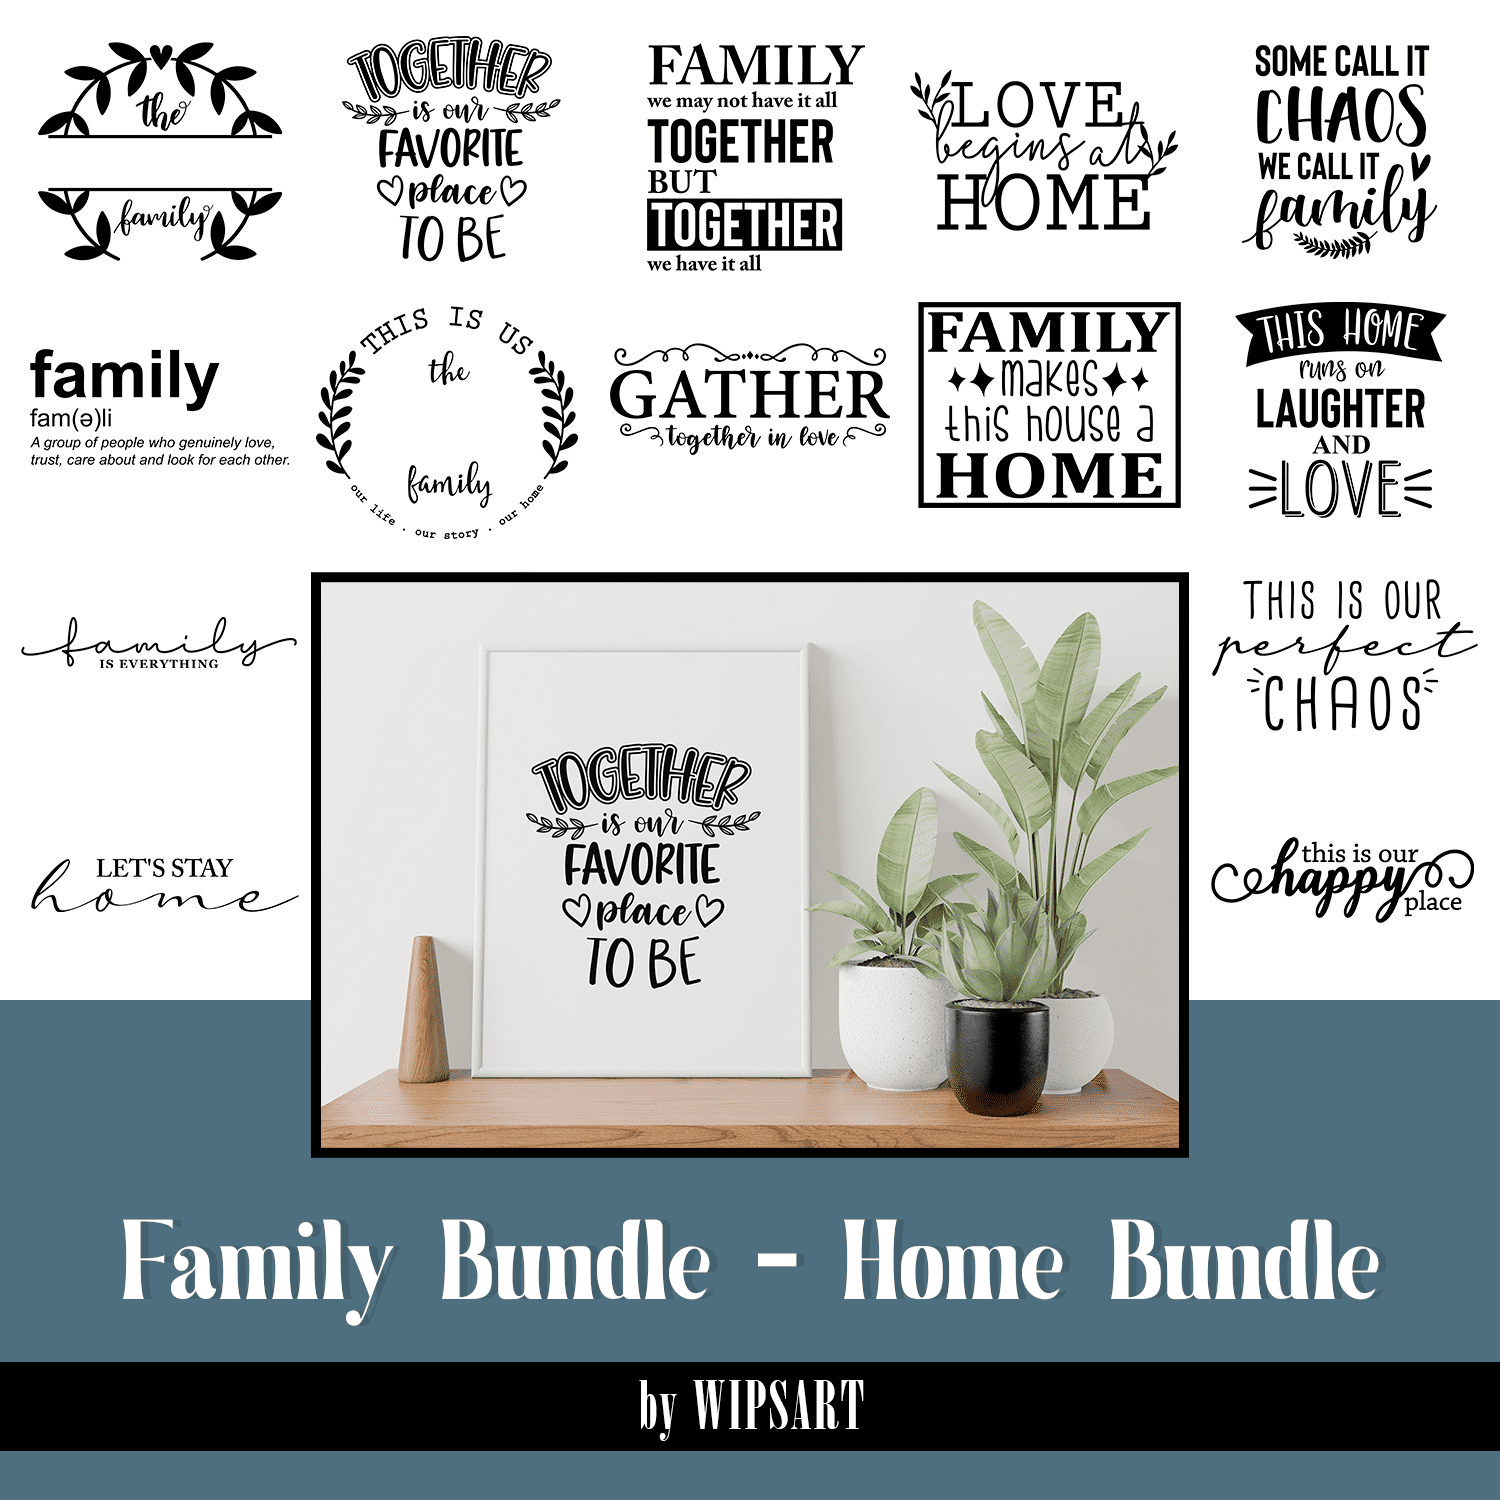 Family Bundle - Home Bundle cover.